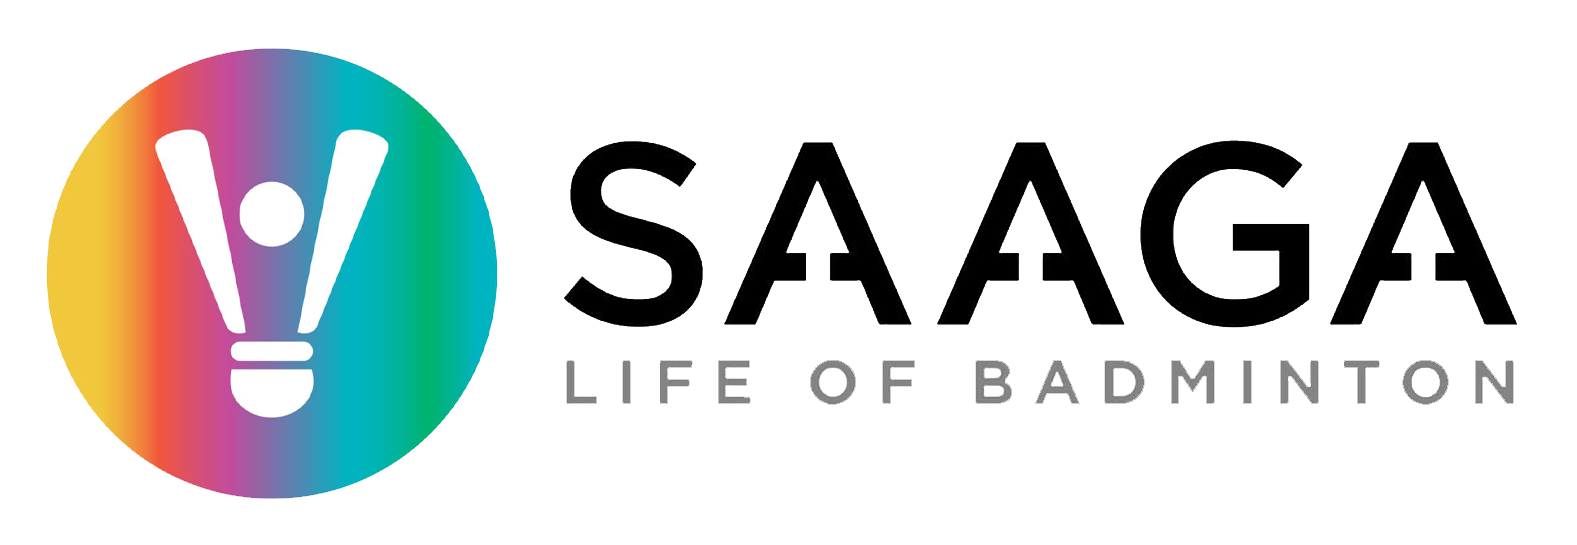 Official Website of Saaga Badminton Academy